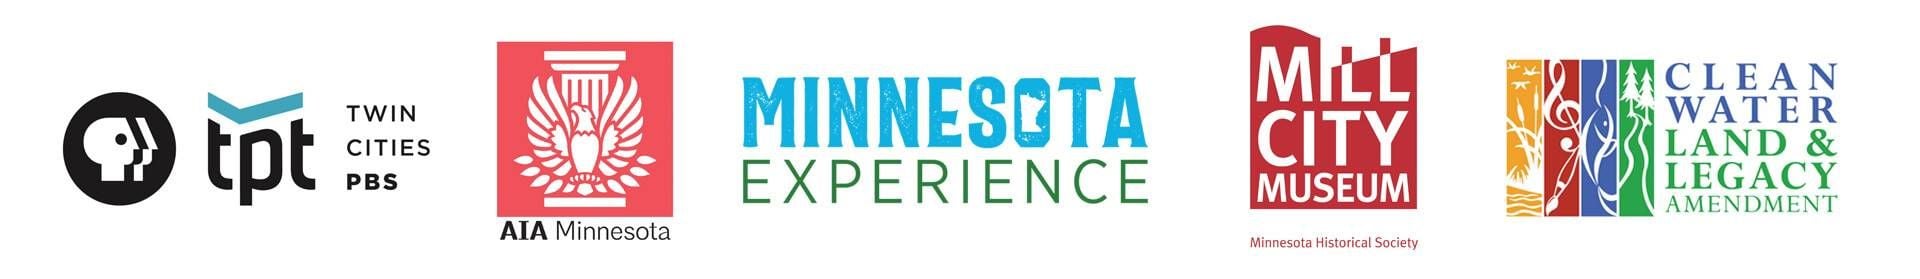 tpt, AIA, Minnesota Experience, Mill City Museum and Legacy logoa